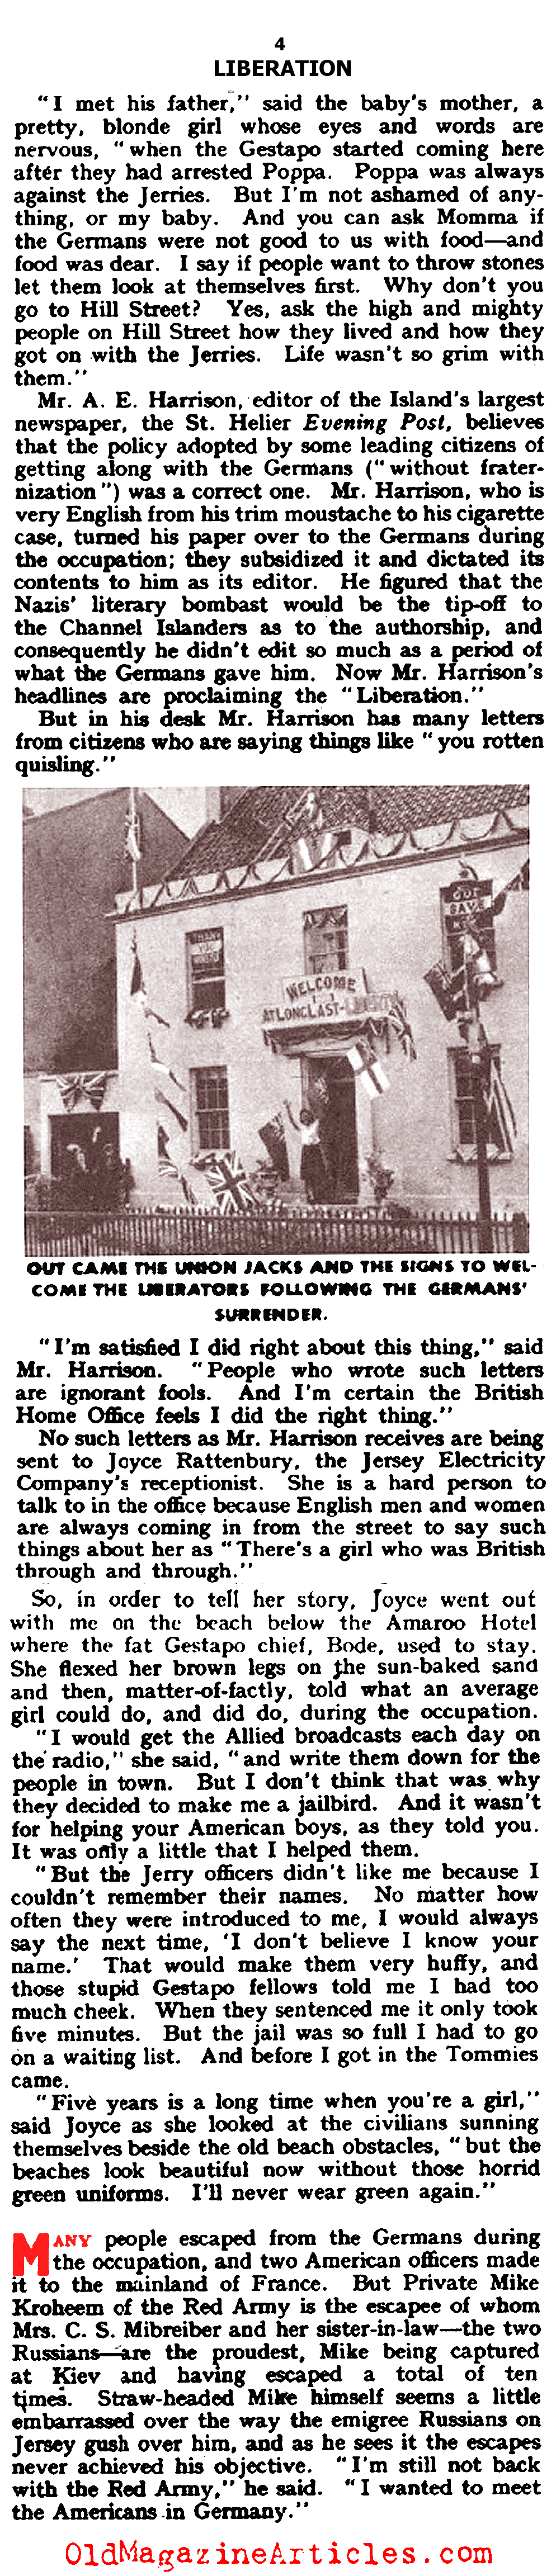 ''Occupied England'' (Yank Magazine, 1945)